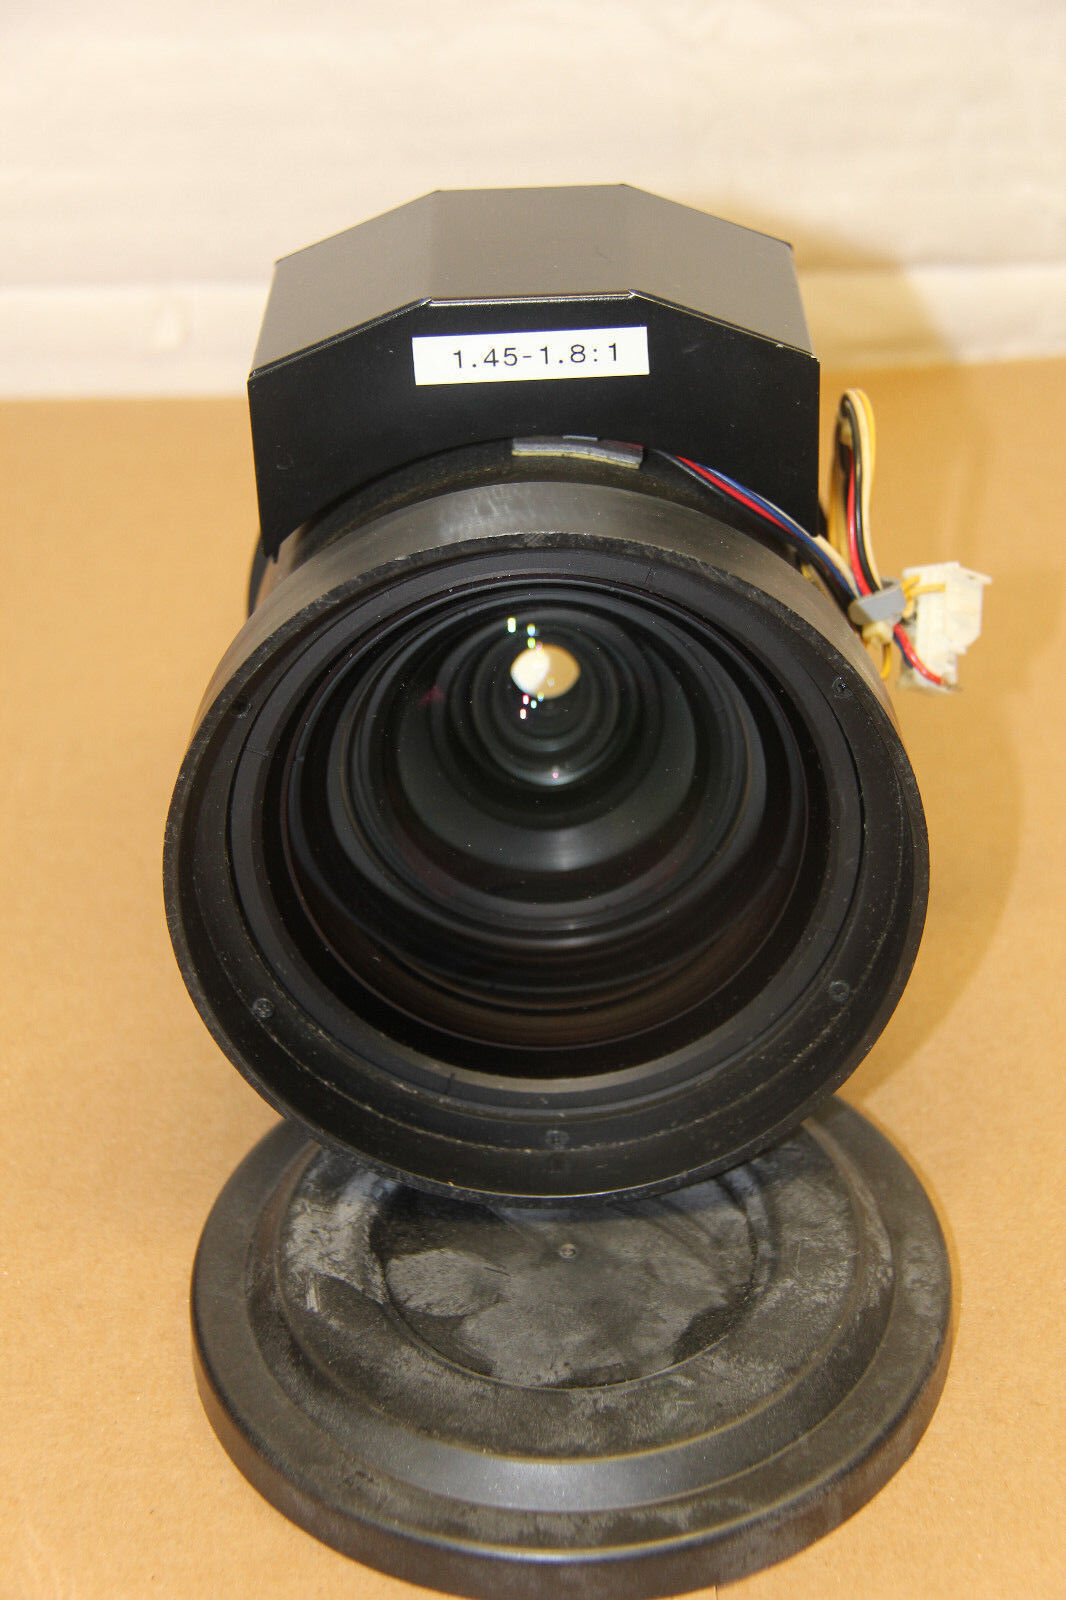 Christie Digital Projection HighLite SL-14Z DLP Lens 1.45-1.8 Konica Minolta 